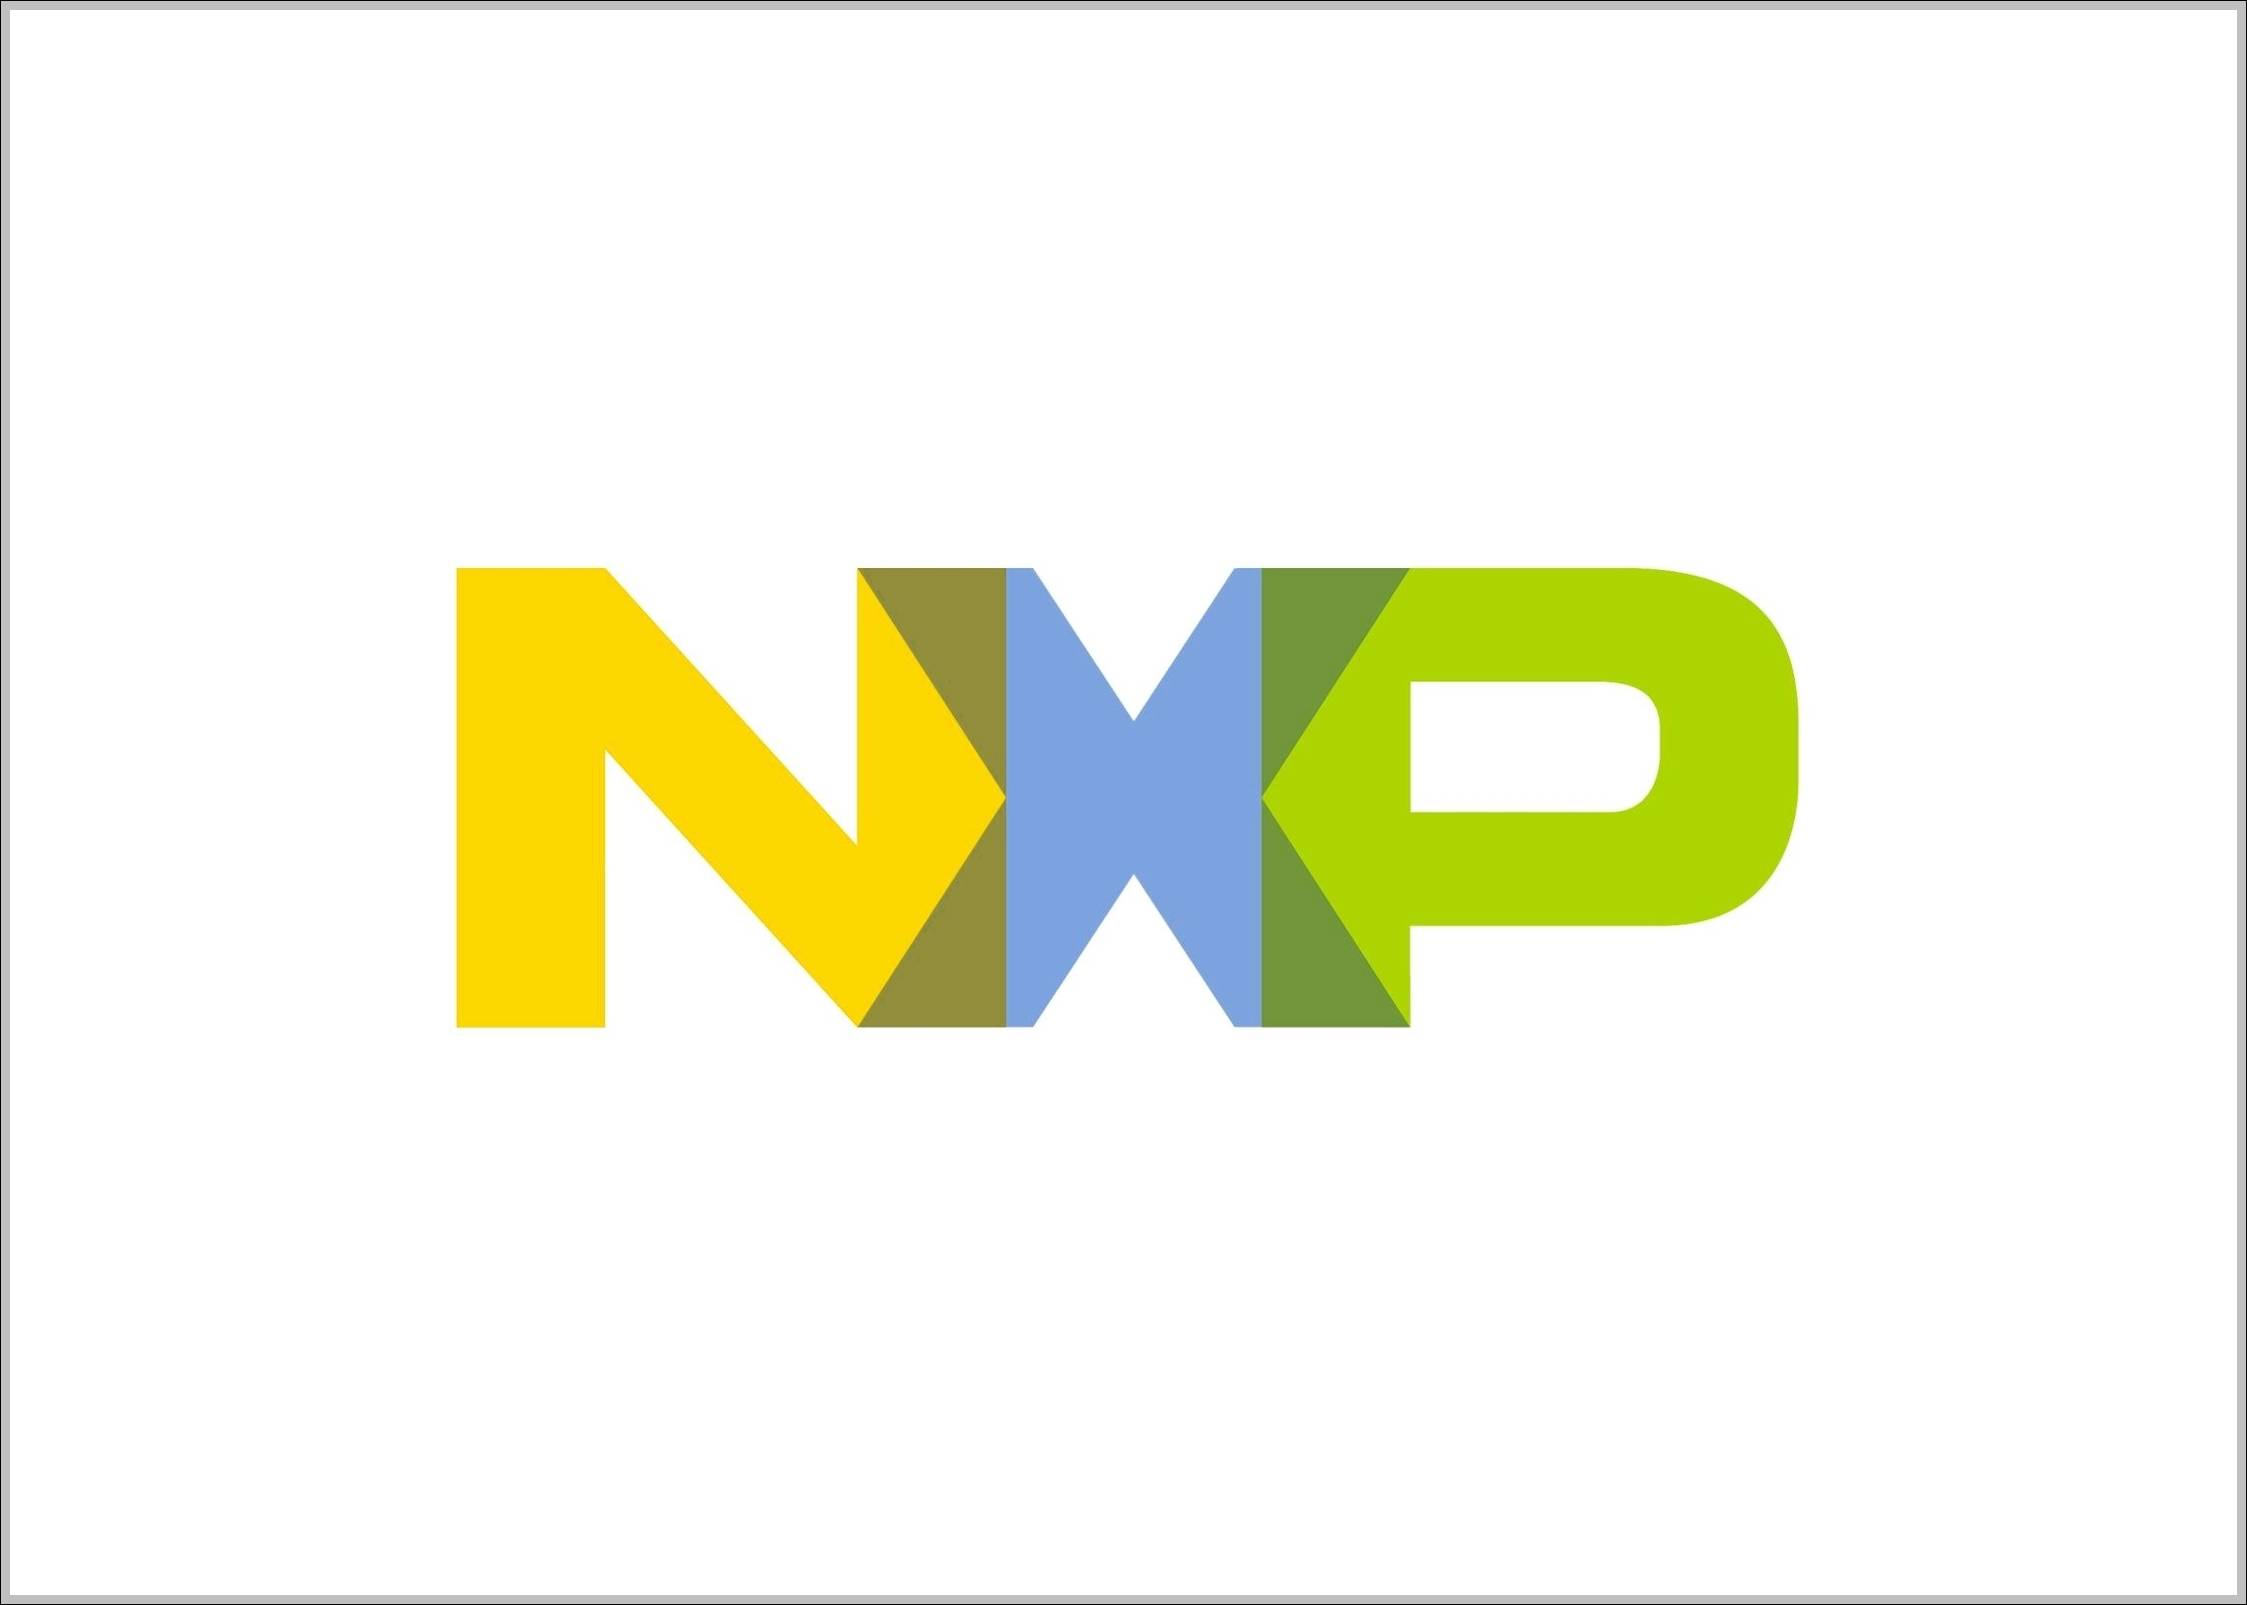 NXP Logo - NXP logo | Logo Sign - Logos, Signs, Symbols, Trademarks of ...